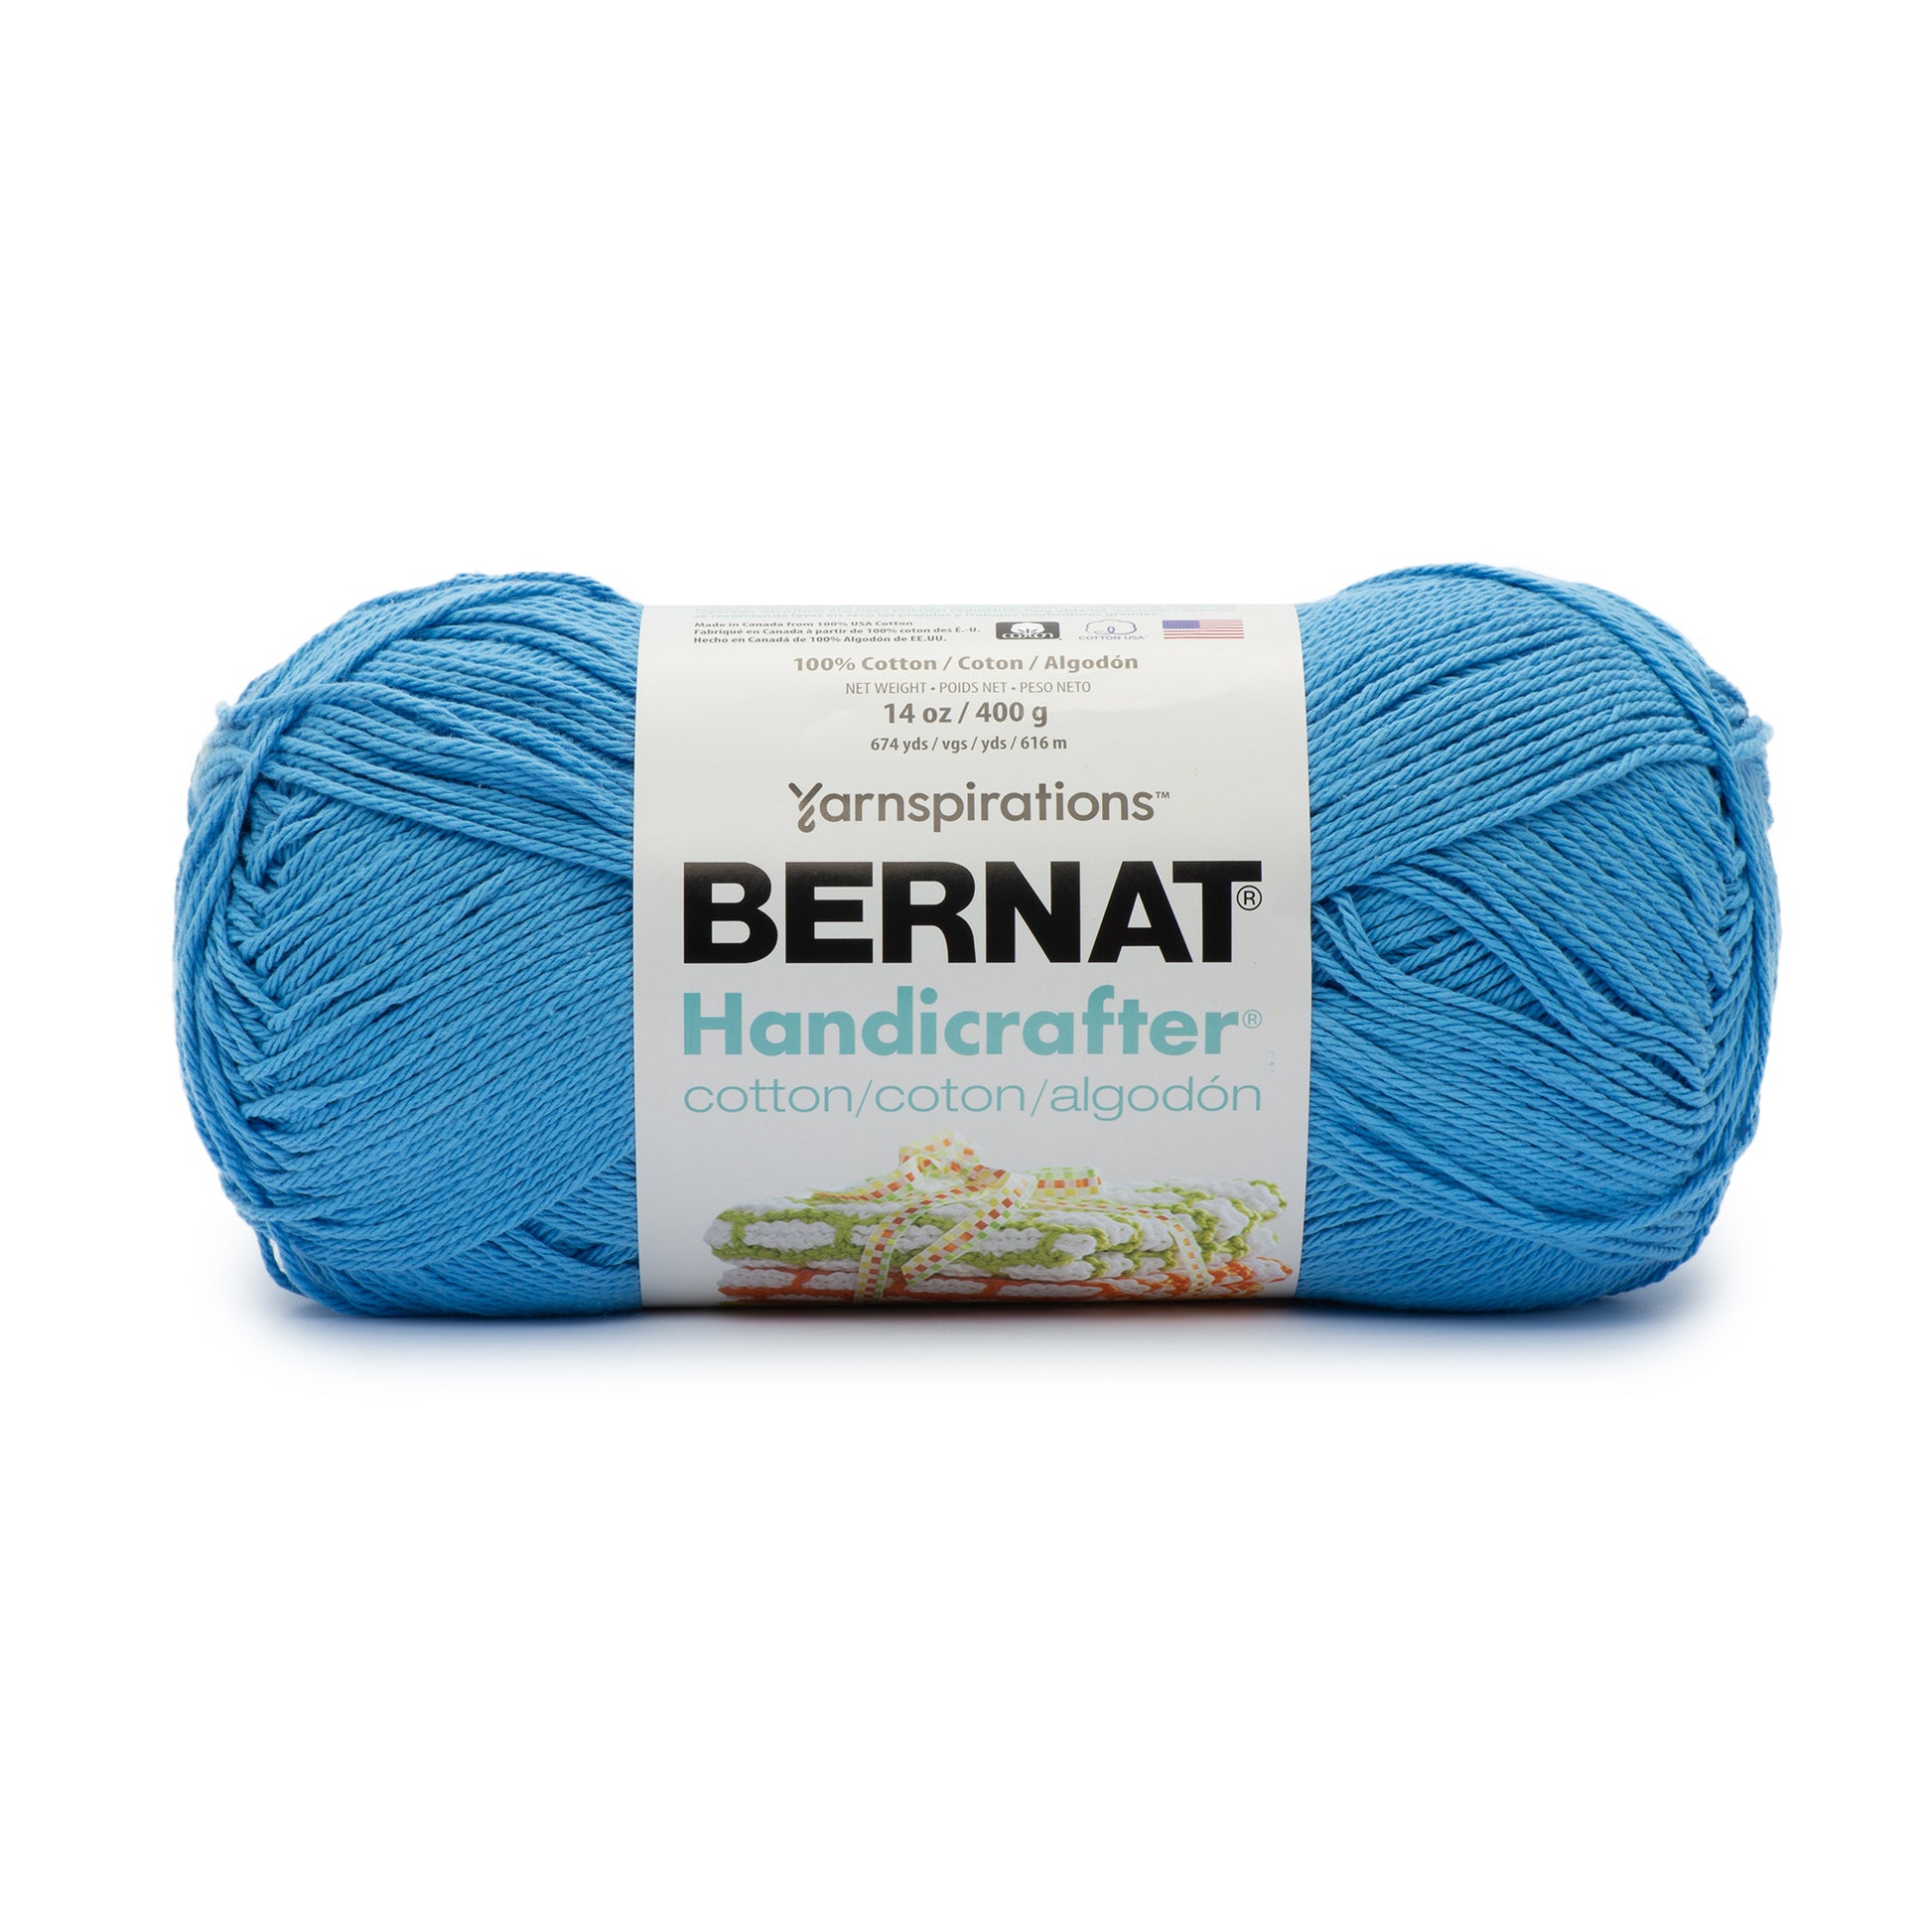 Bernat Handicrafter Cotton Off White Yarn - 2 Pack of 400g/14oz - Cotton -  4 Medium (Worsted) - 710 Yards - Knitting/Crochet